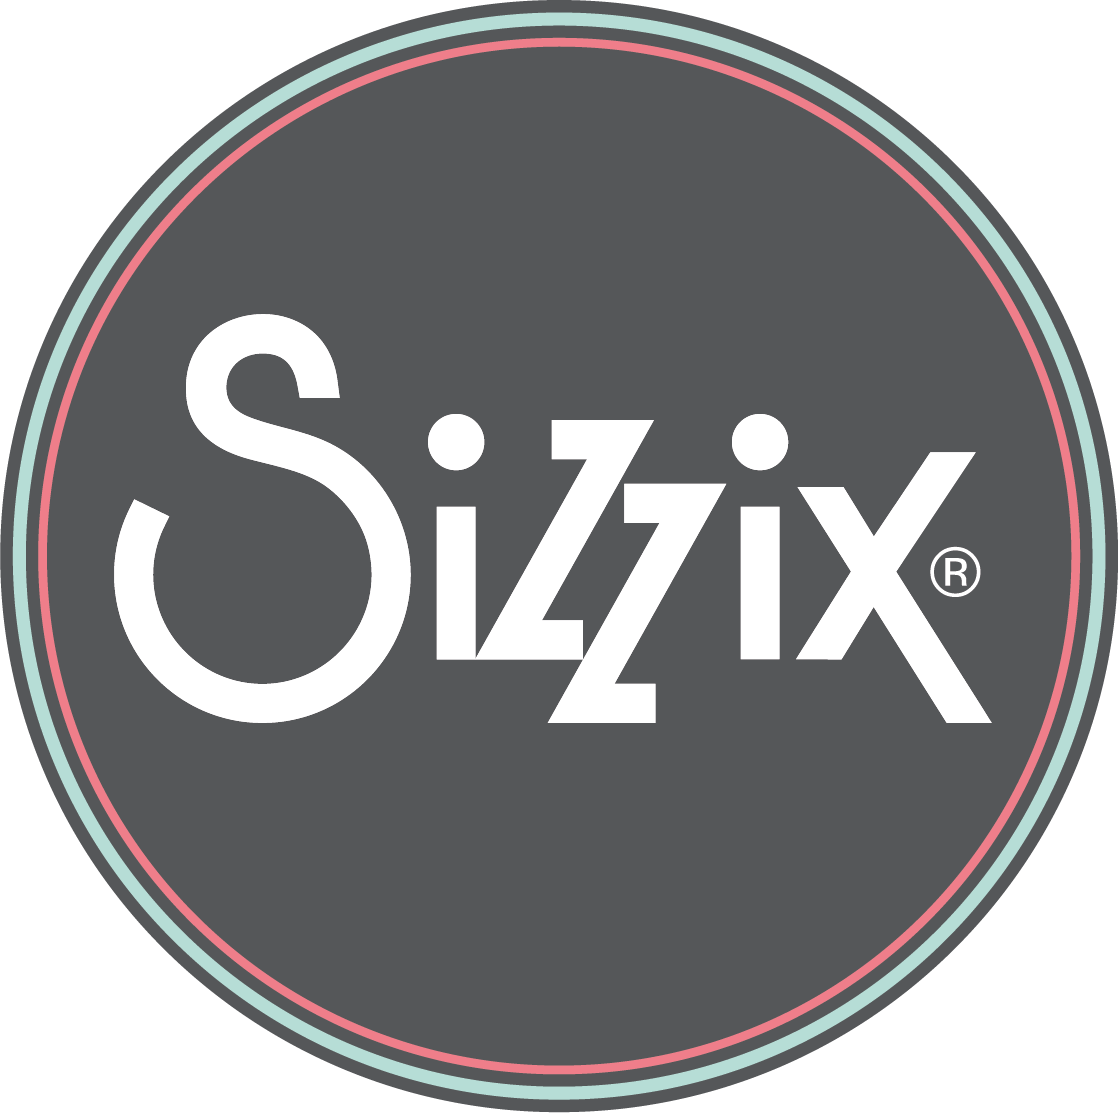 Sizzix LifeStyle - Creative Team Member